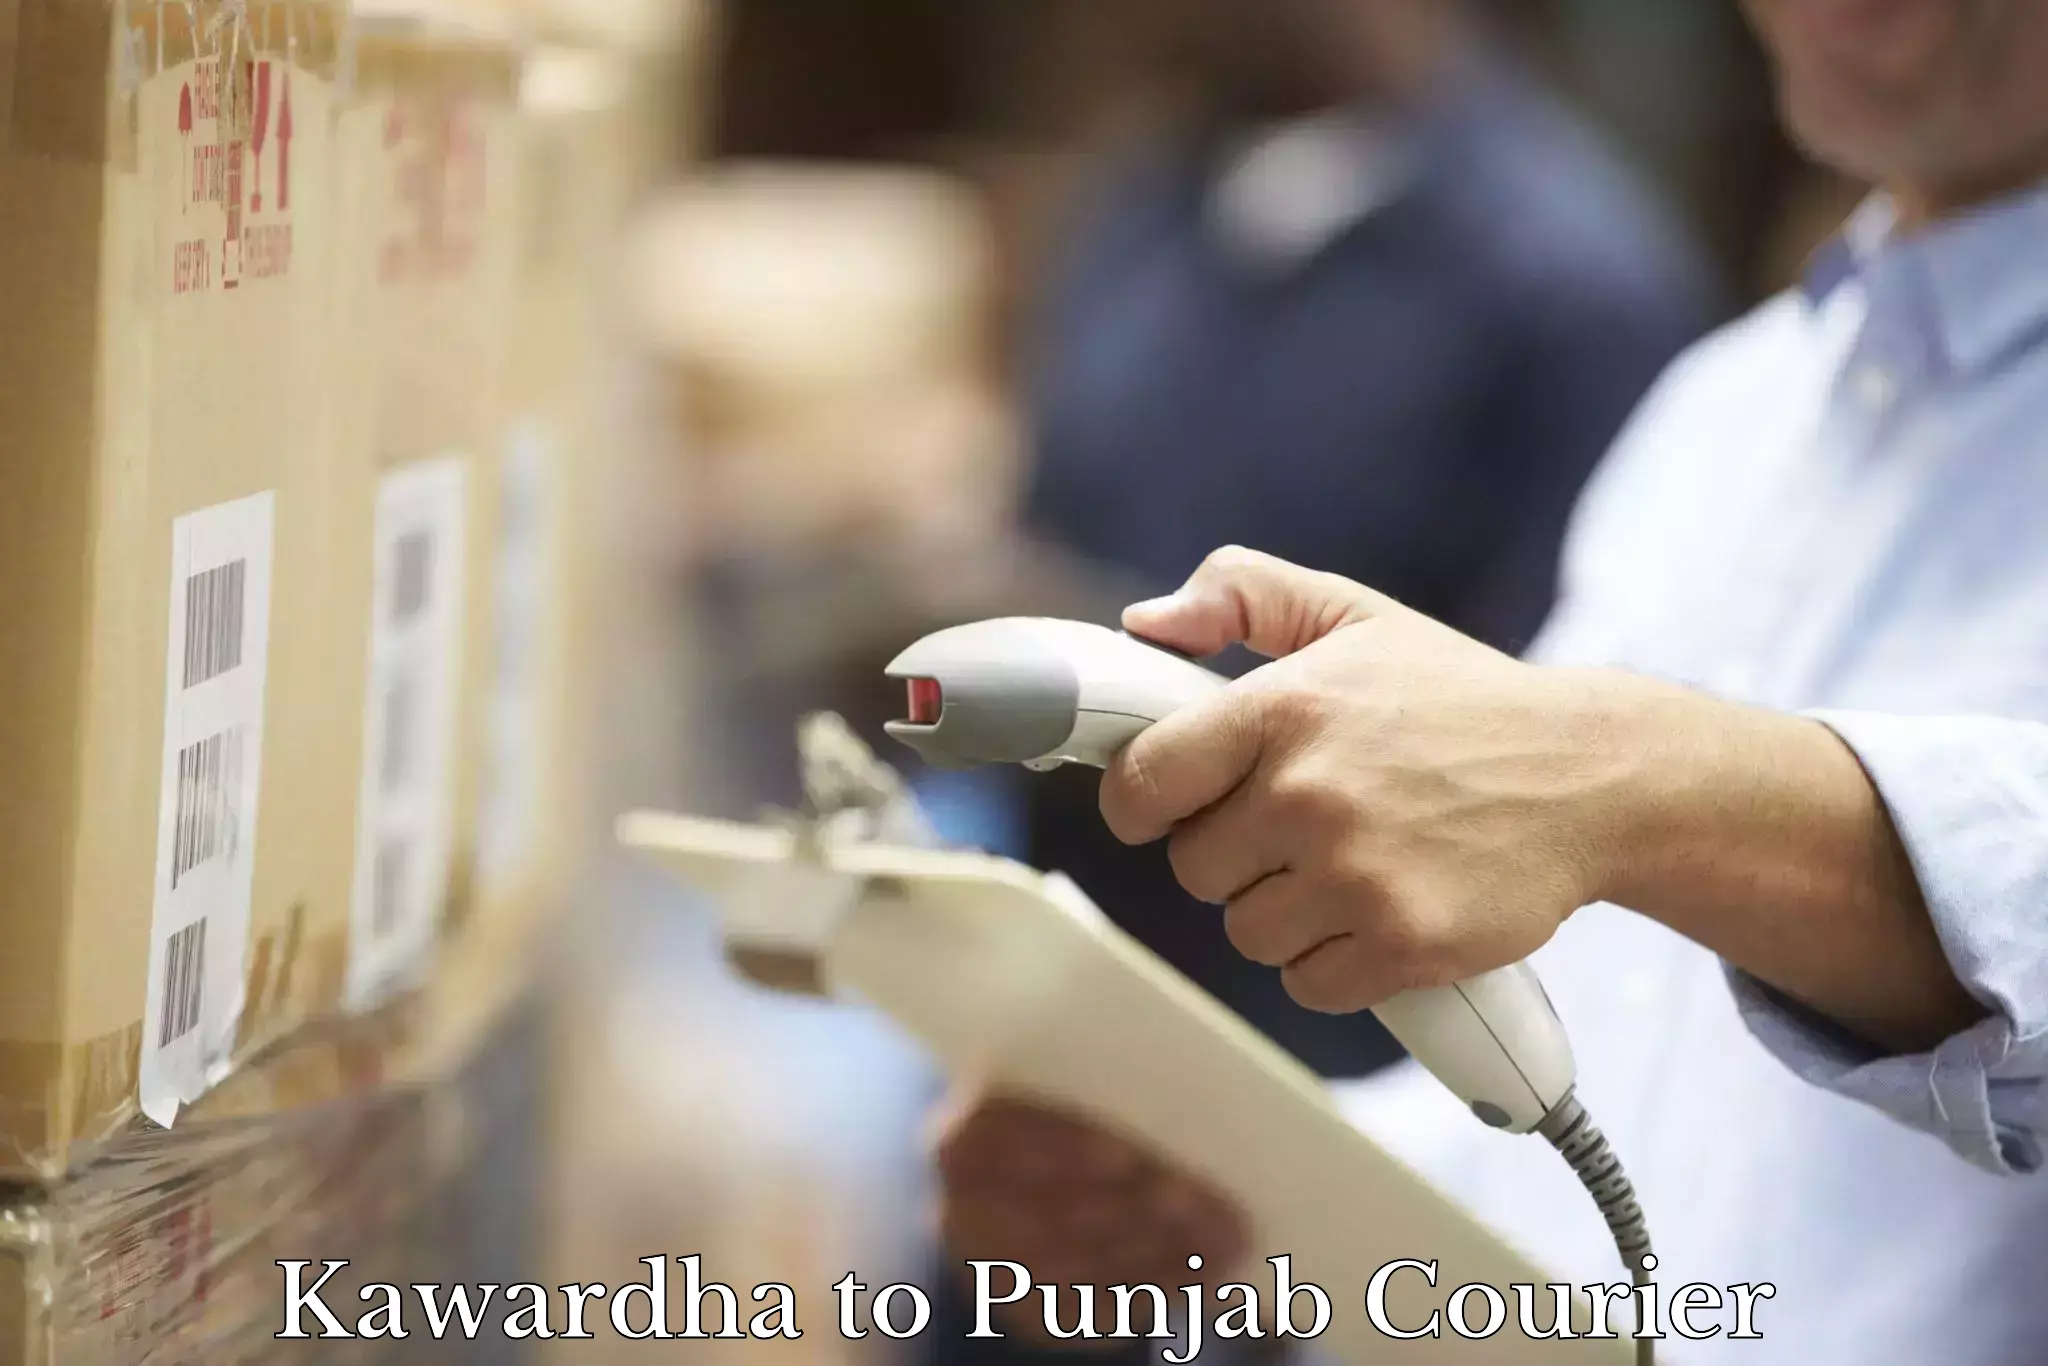 Advanced shipping technology Kawardha to Mohali